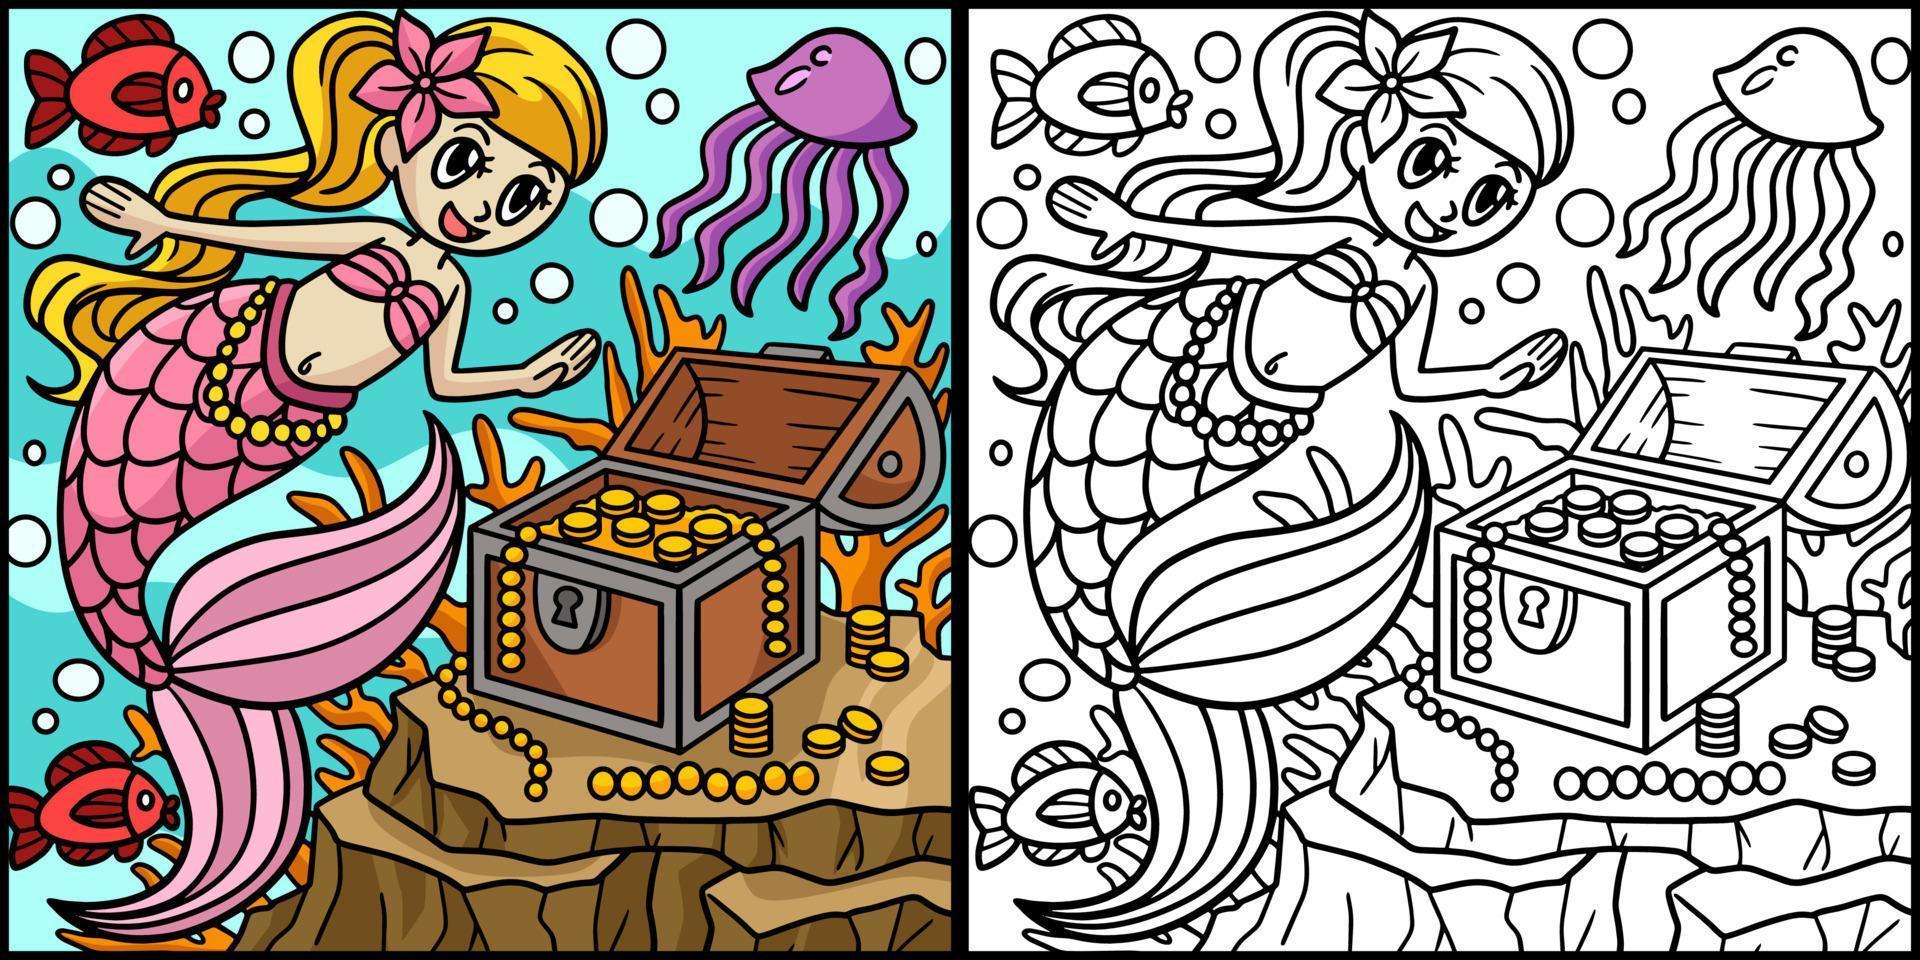 Mermaid With Treasure Box Colored Illustration vector